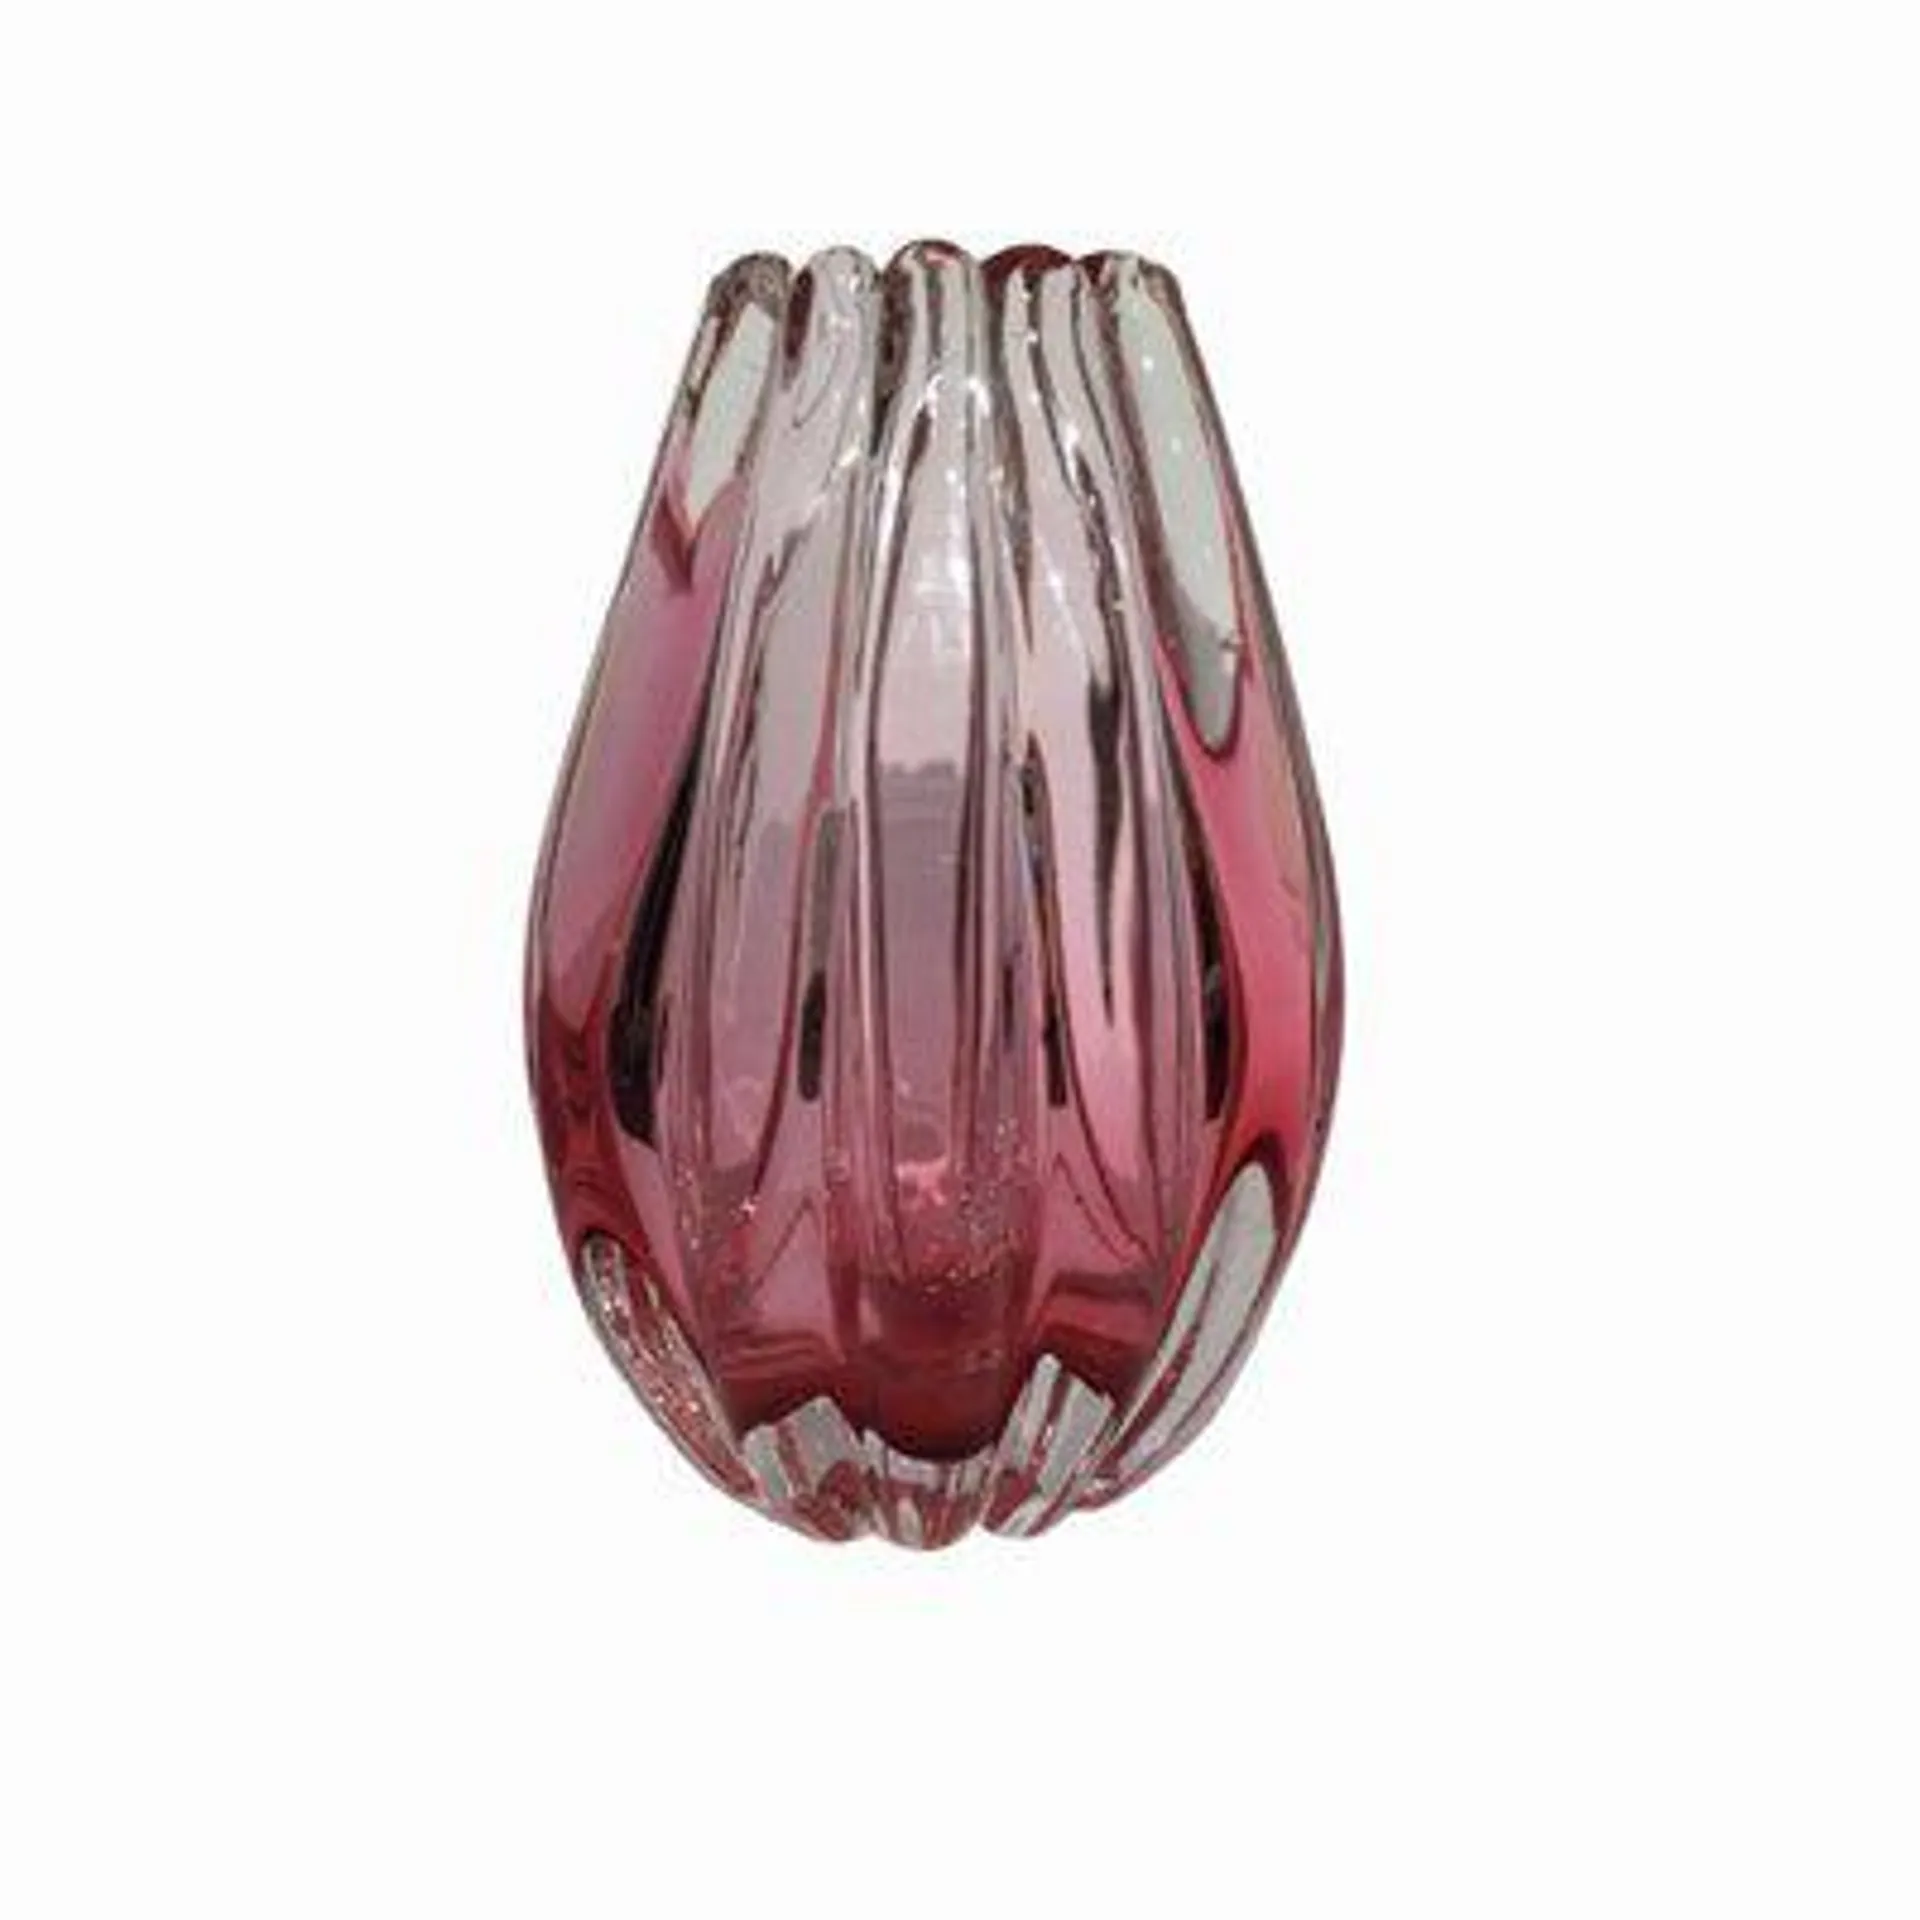 Murano Glass Vase Model 12024 by Flavio Poli for Seguso Vetri D arte Murano, Italy, 1958